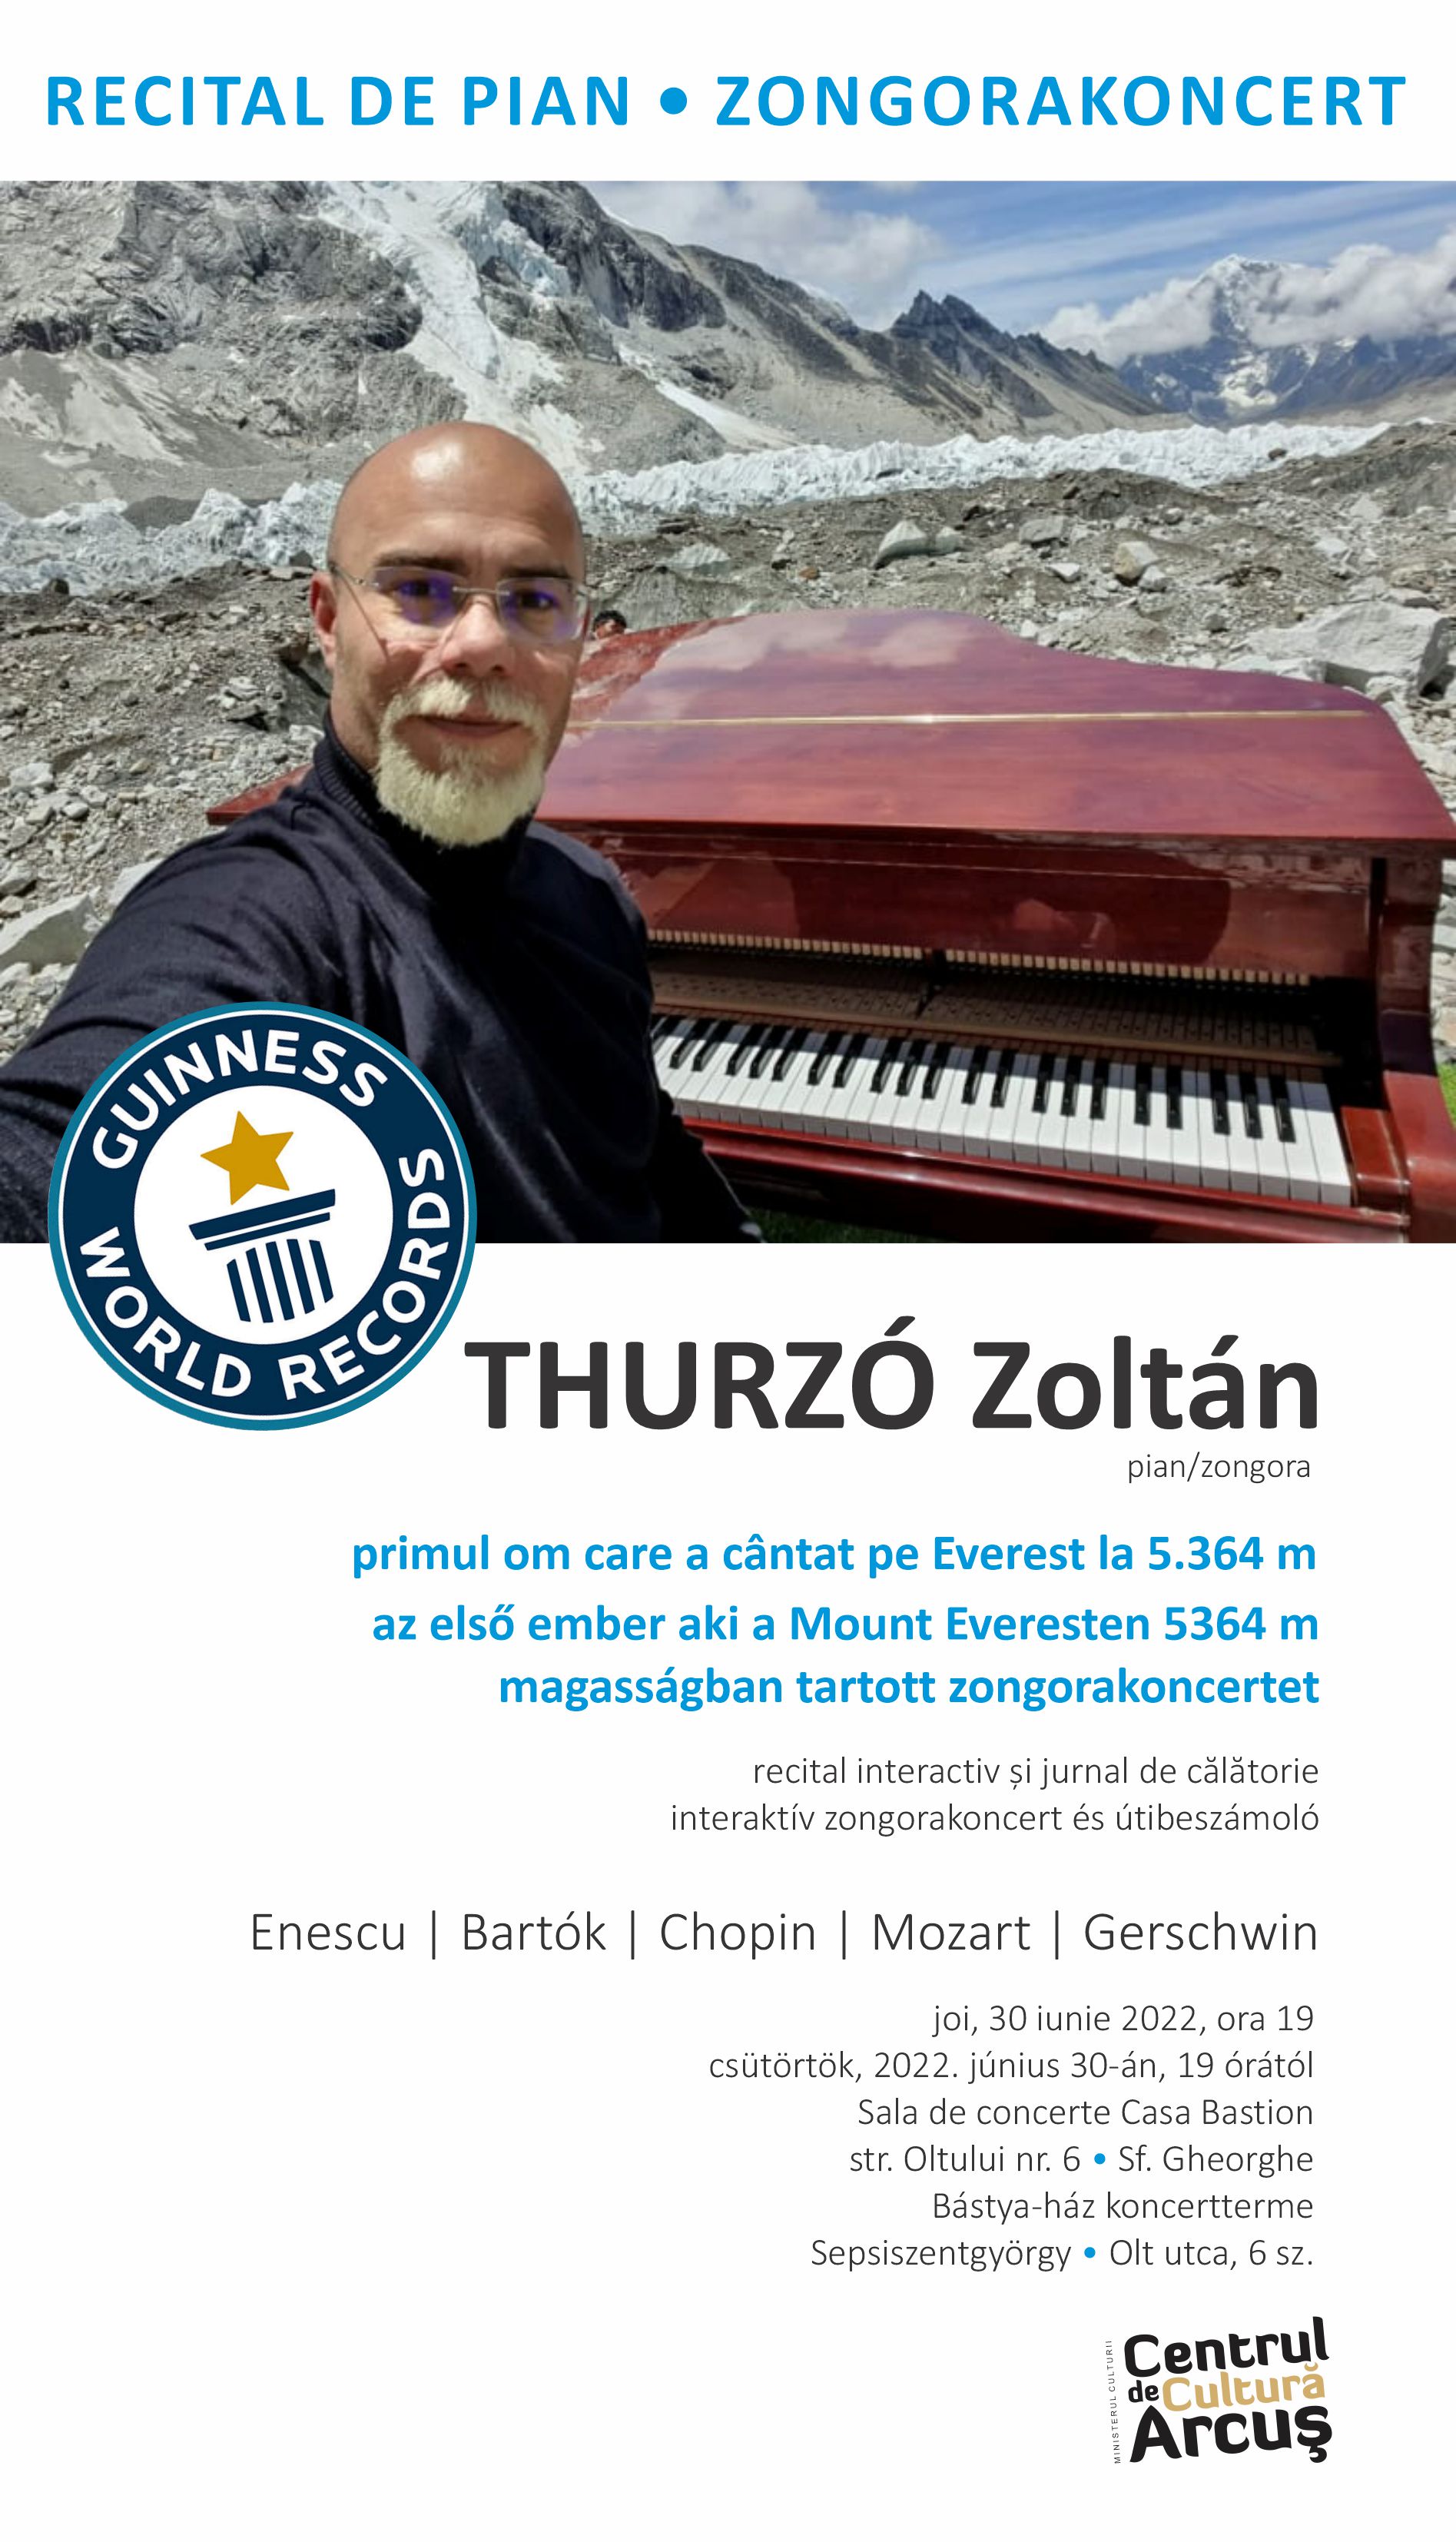 Recital de pian - Thurzó Zoltán 